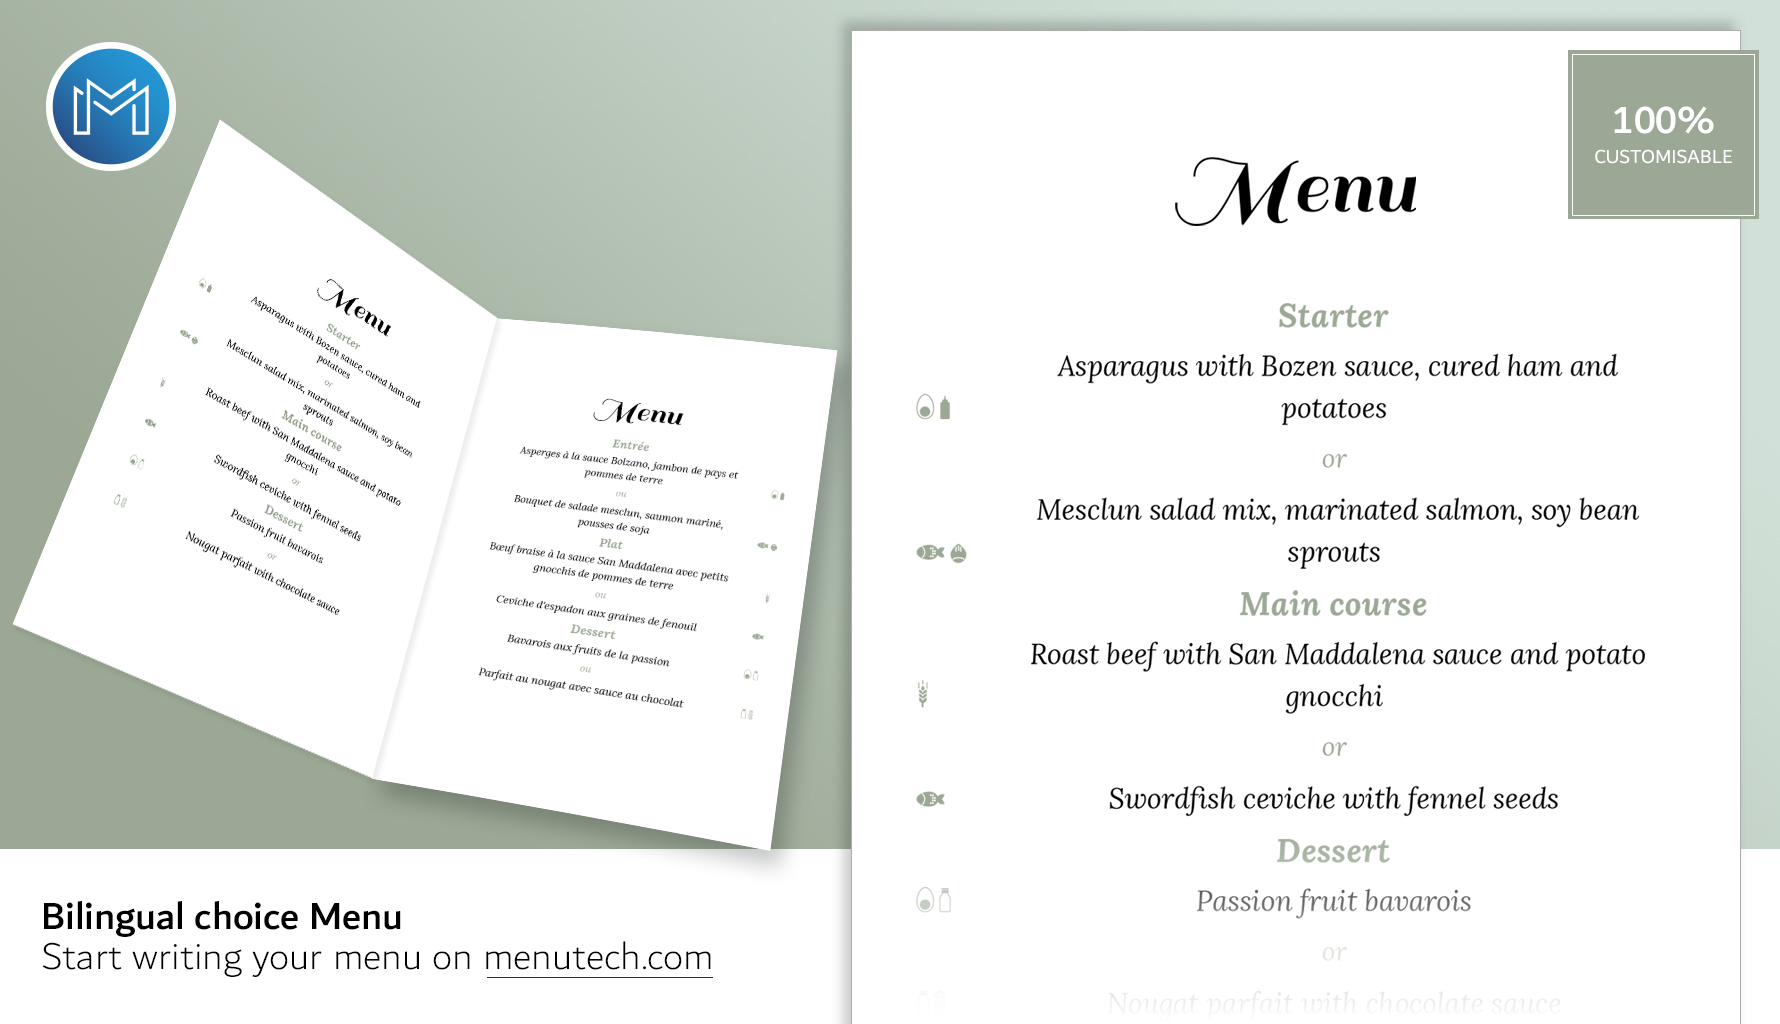 Bilingual menu on Menutech